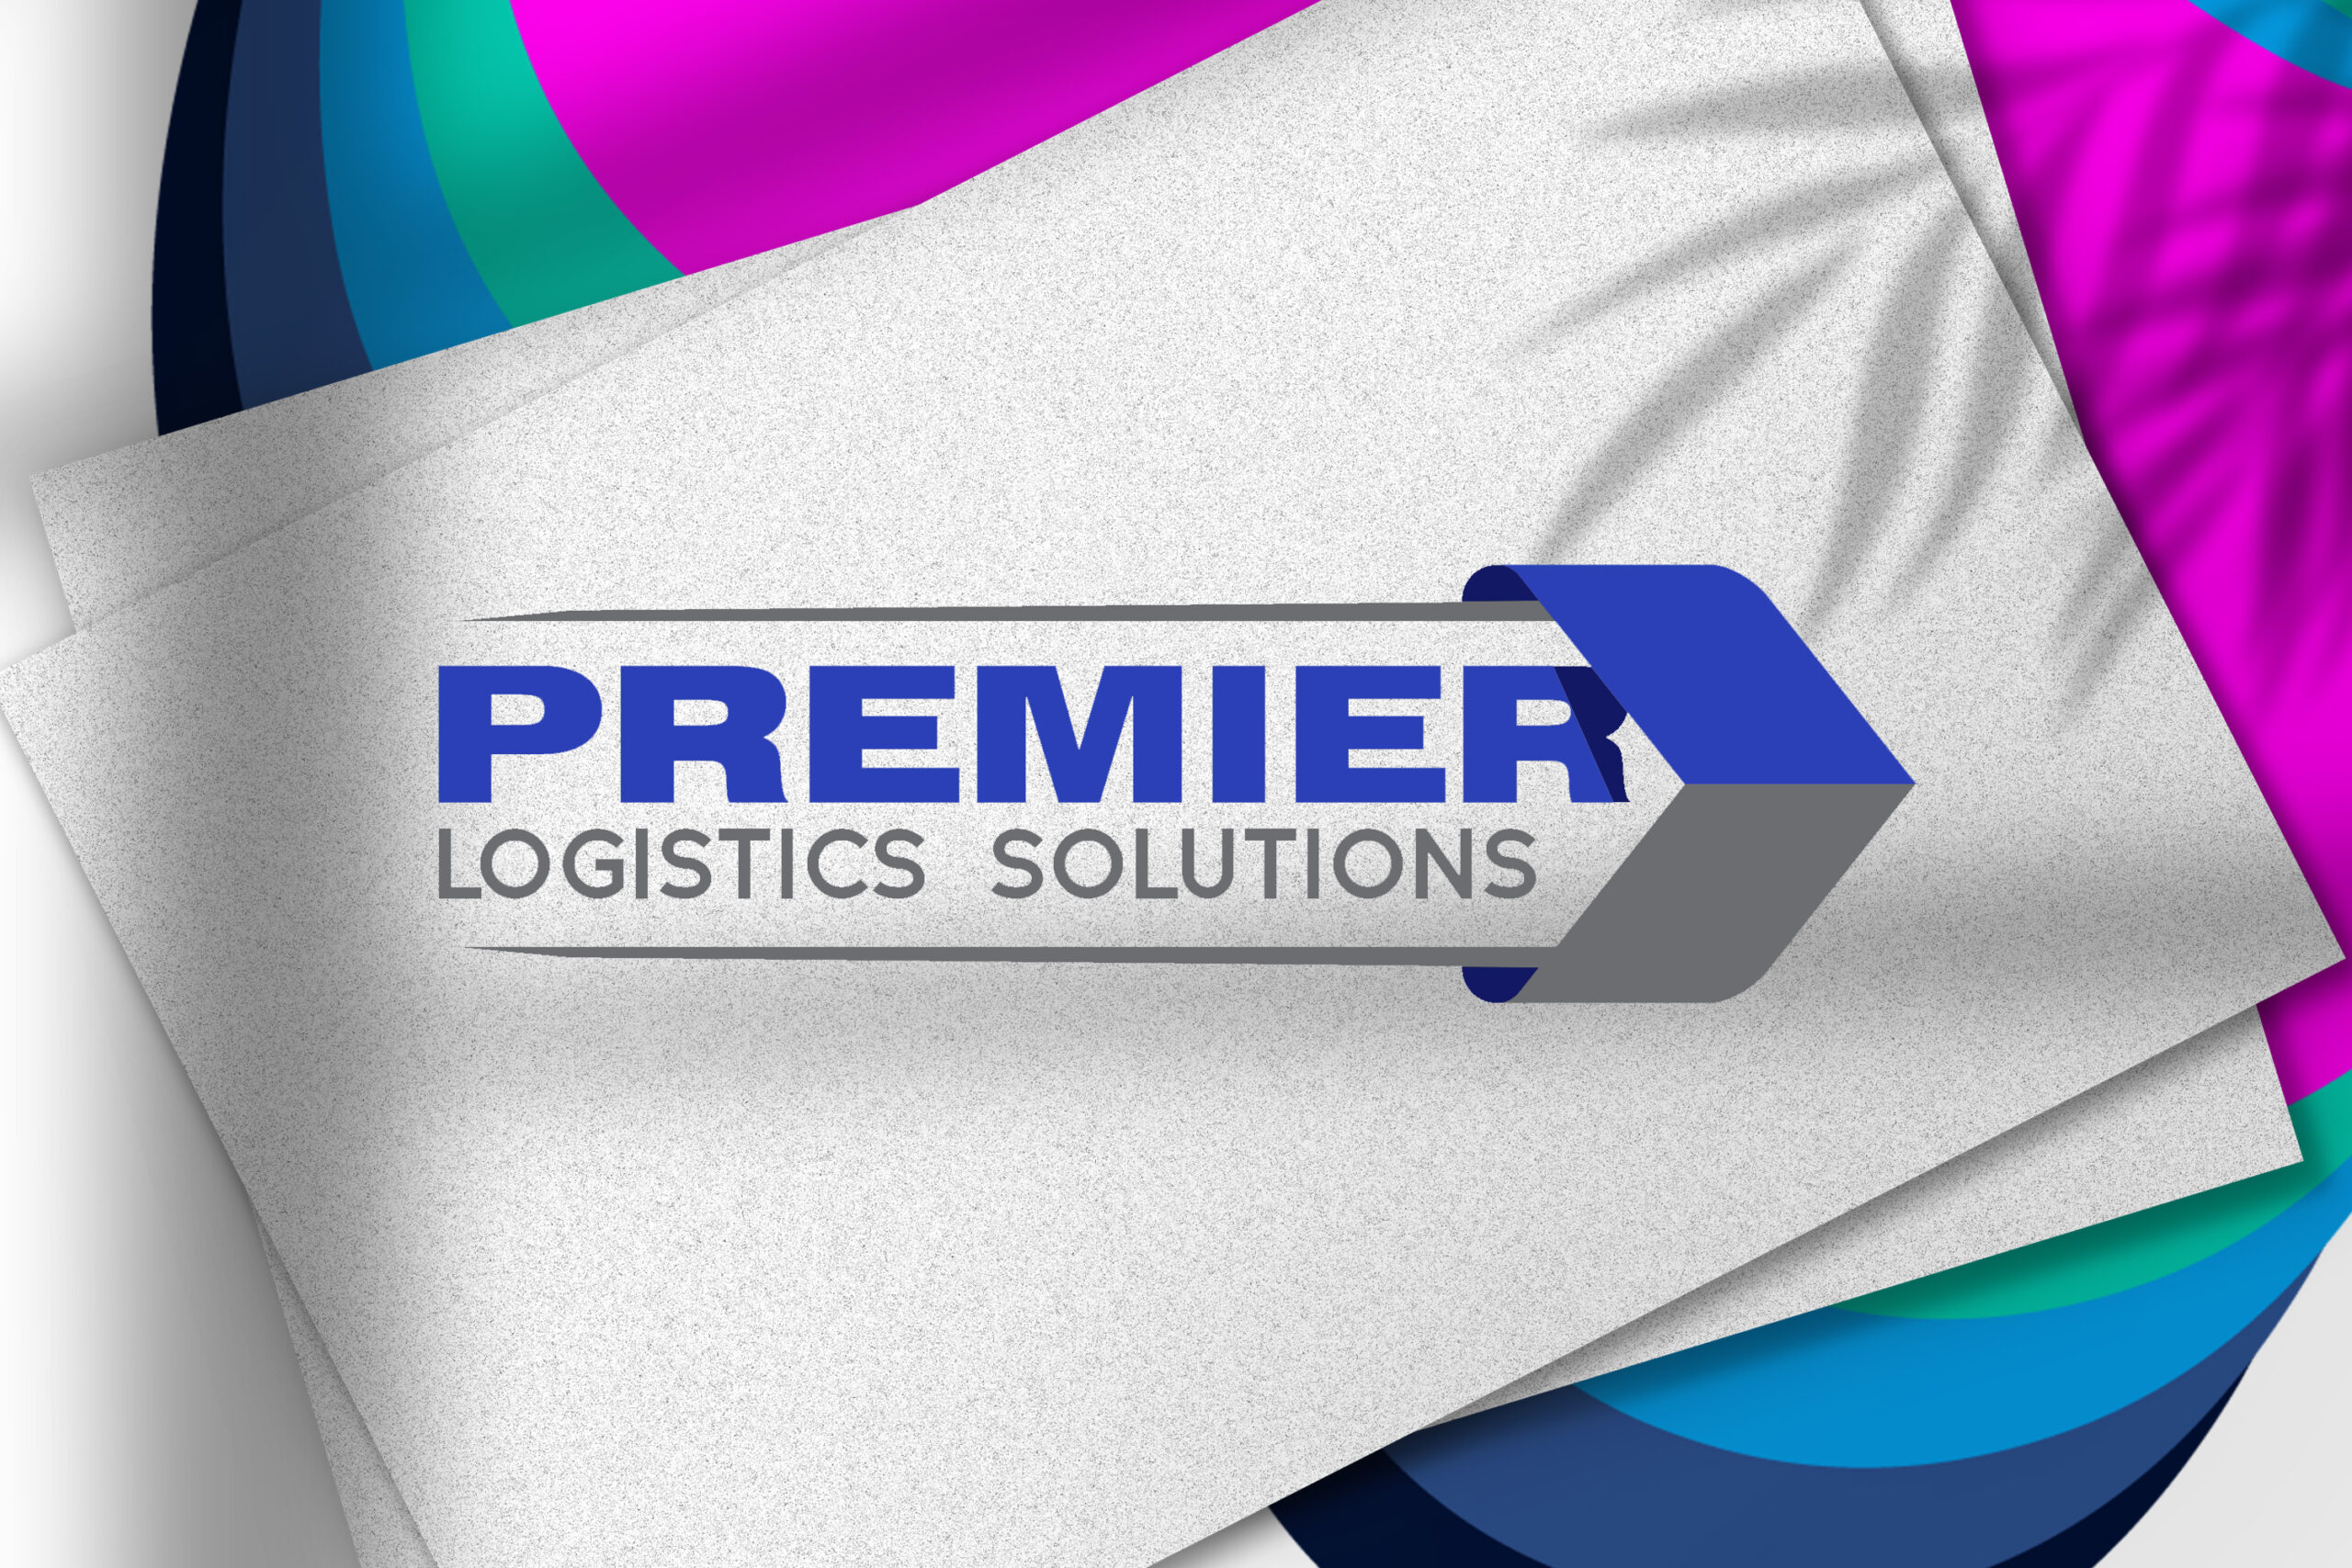 Premier logistics solutions logo